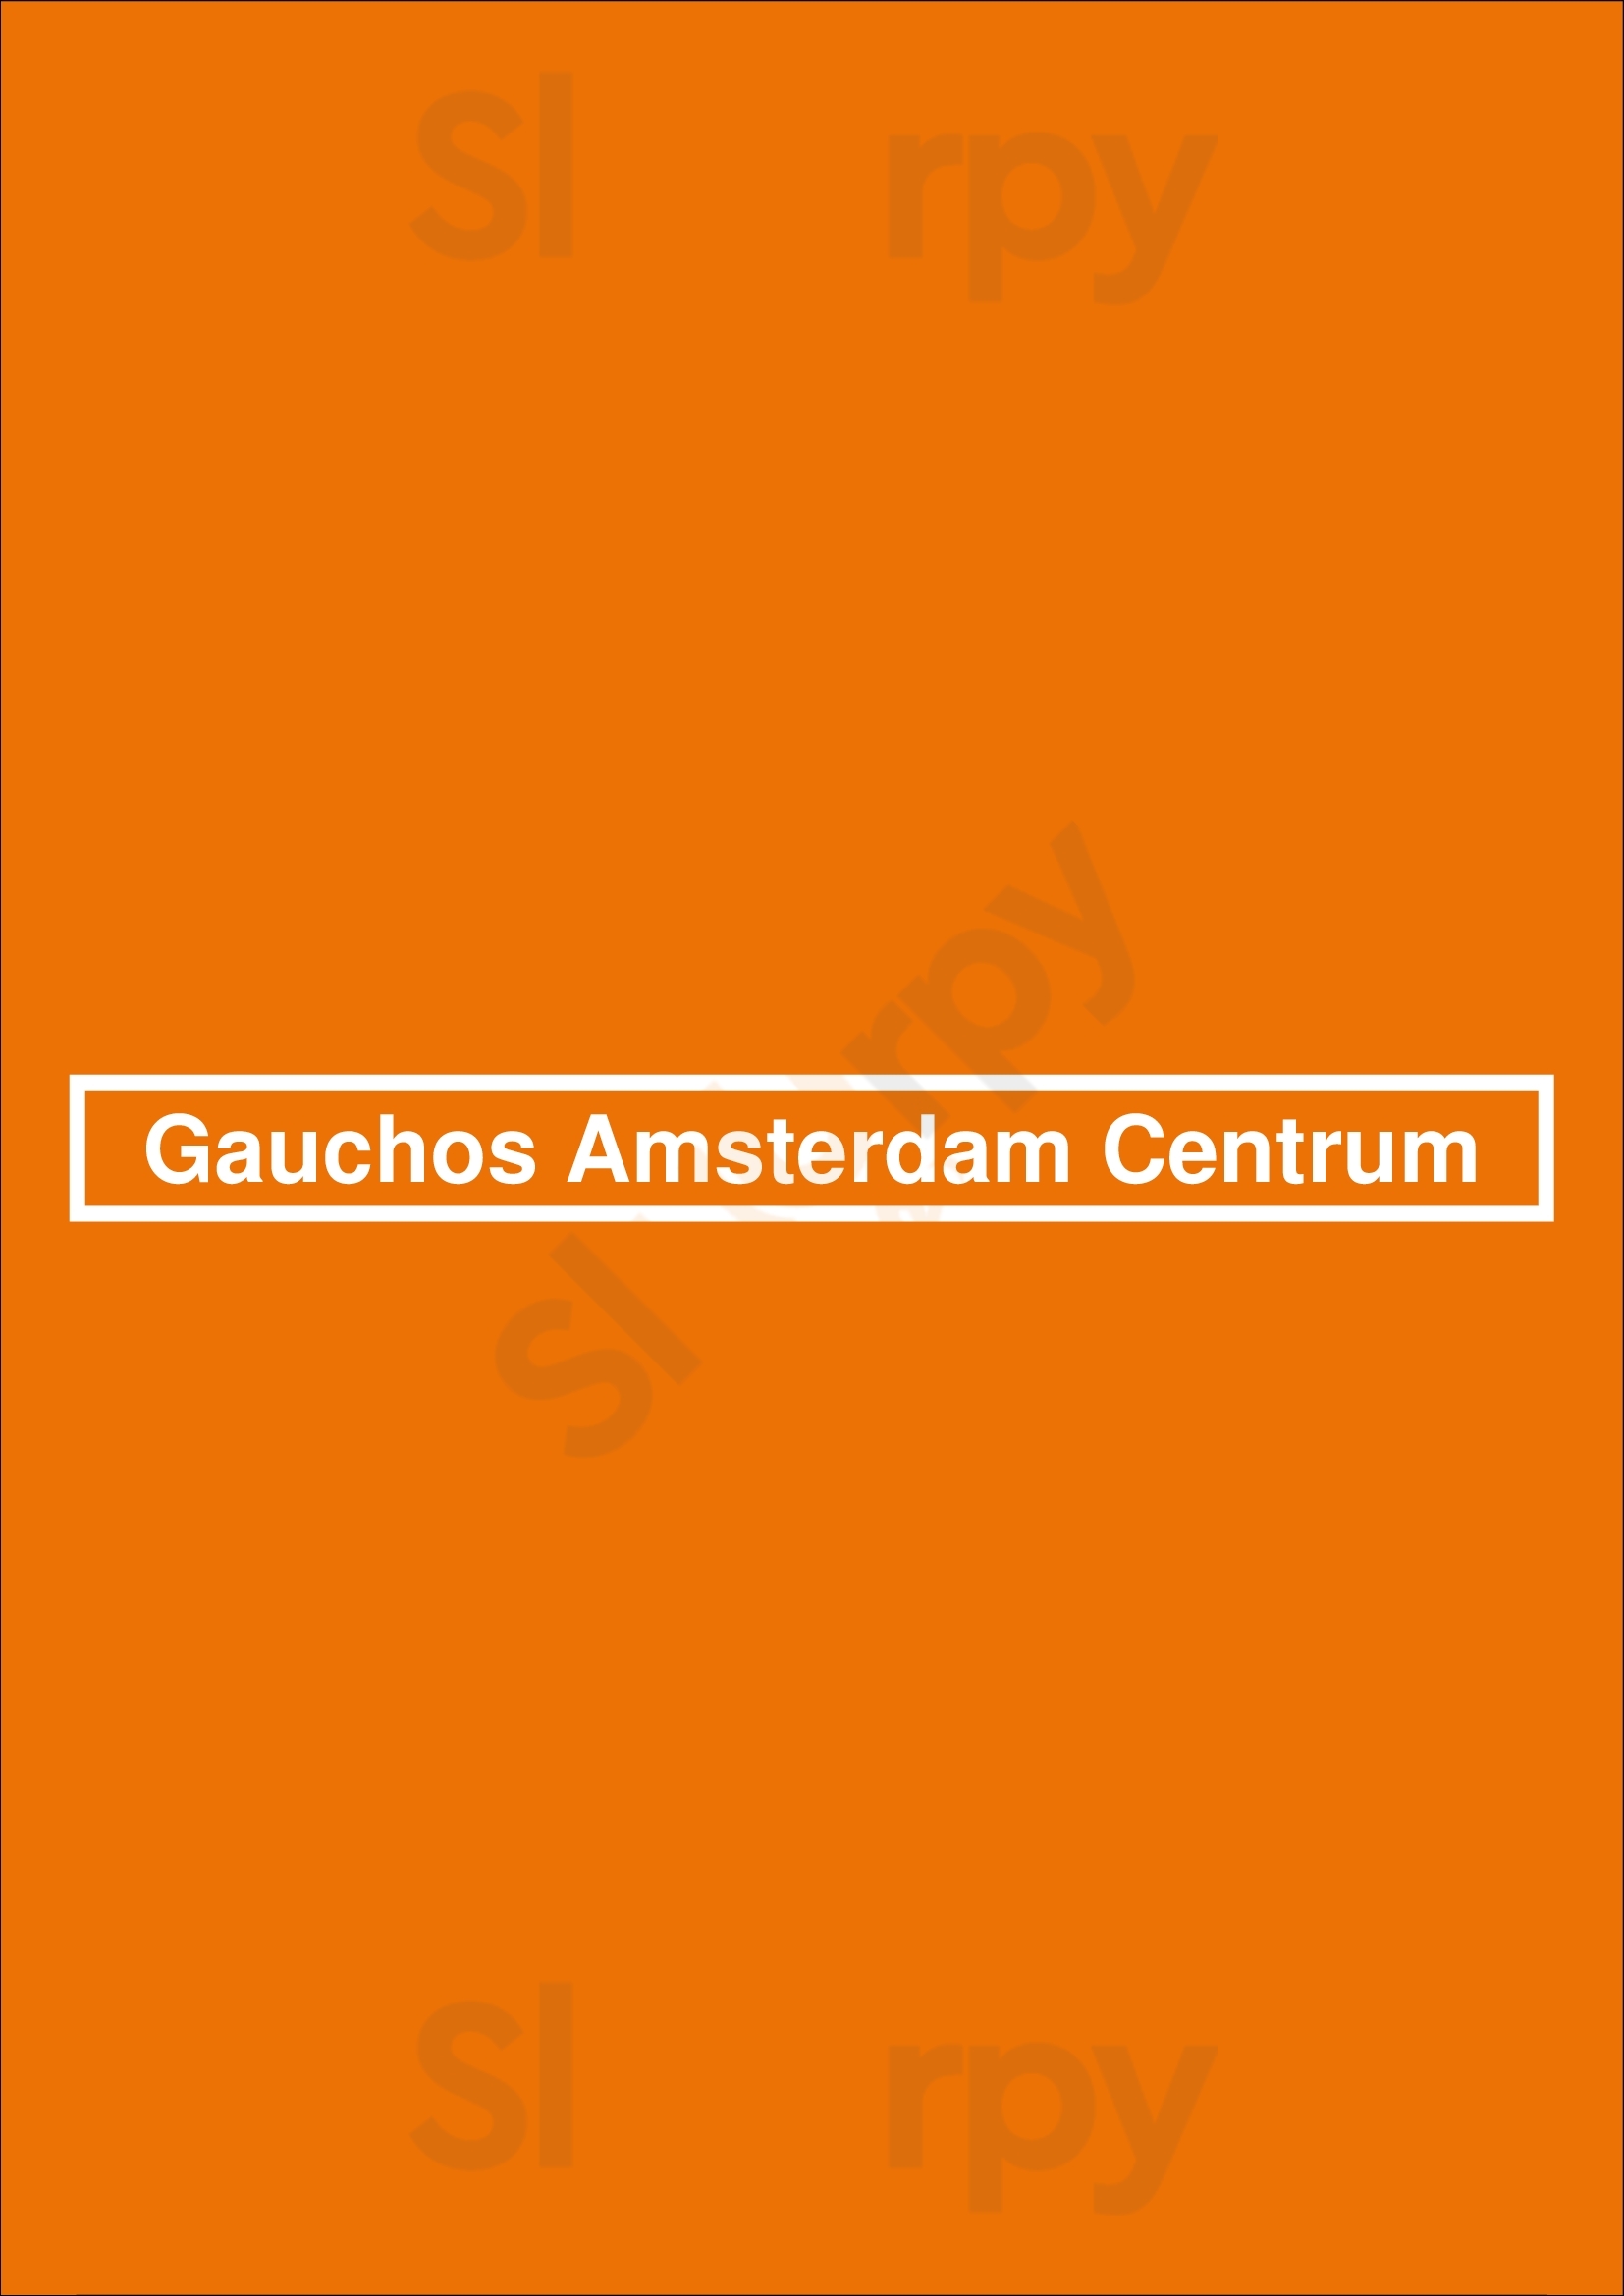 Gauchos Amsterdam Centrum Amsterdam Menu - 1